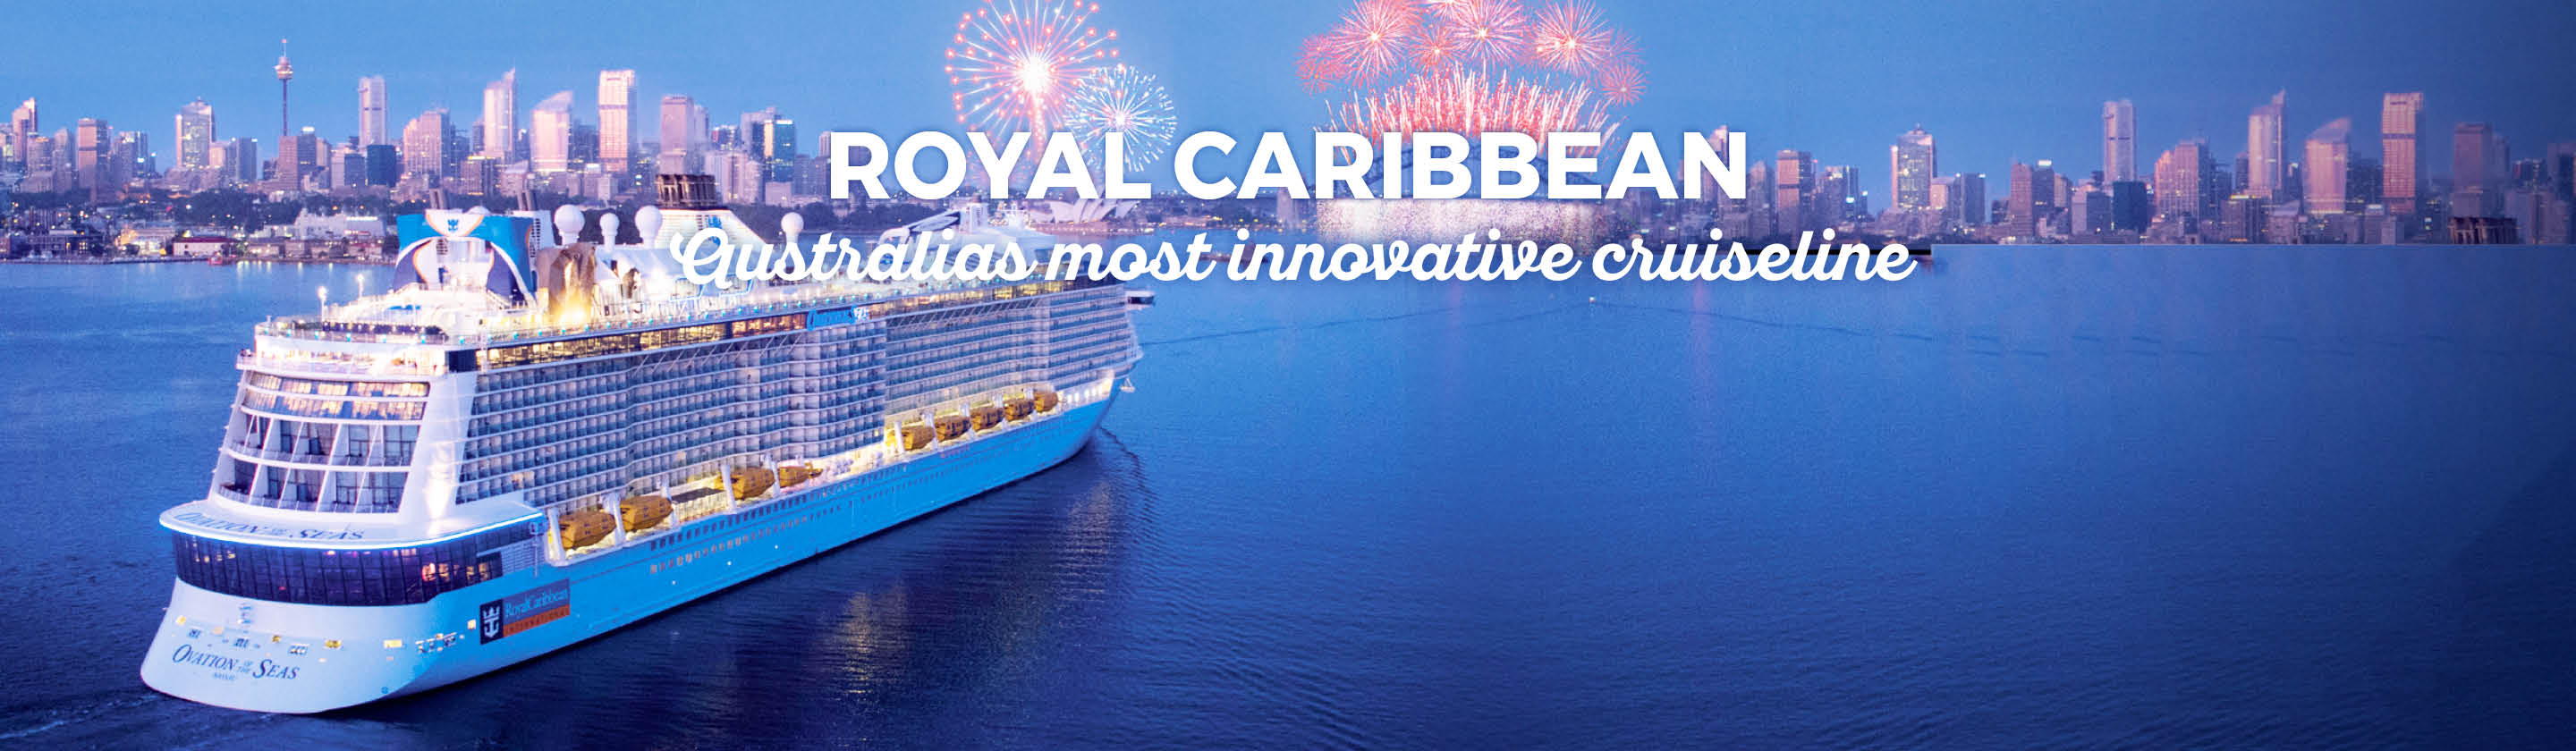 royal-caribbean-cruise-offers-4.jpg